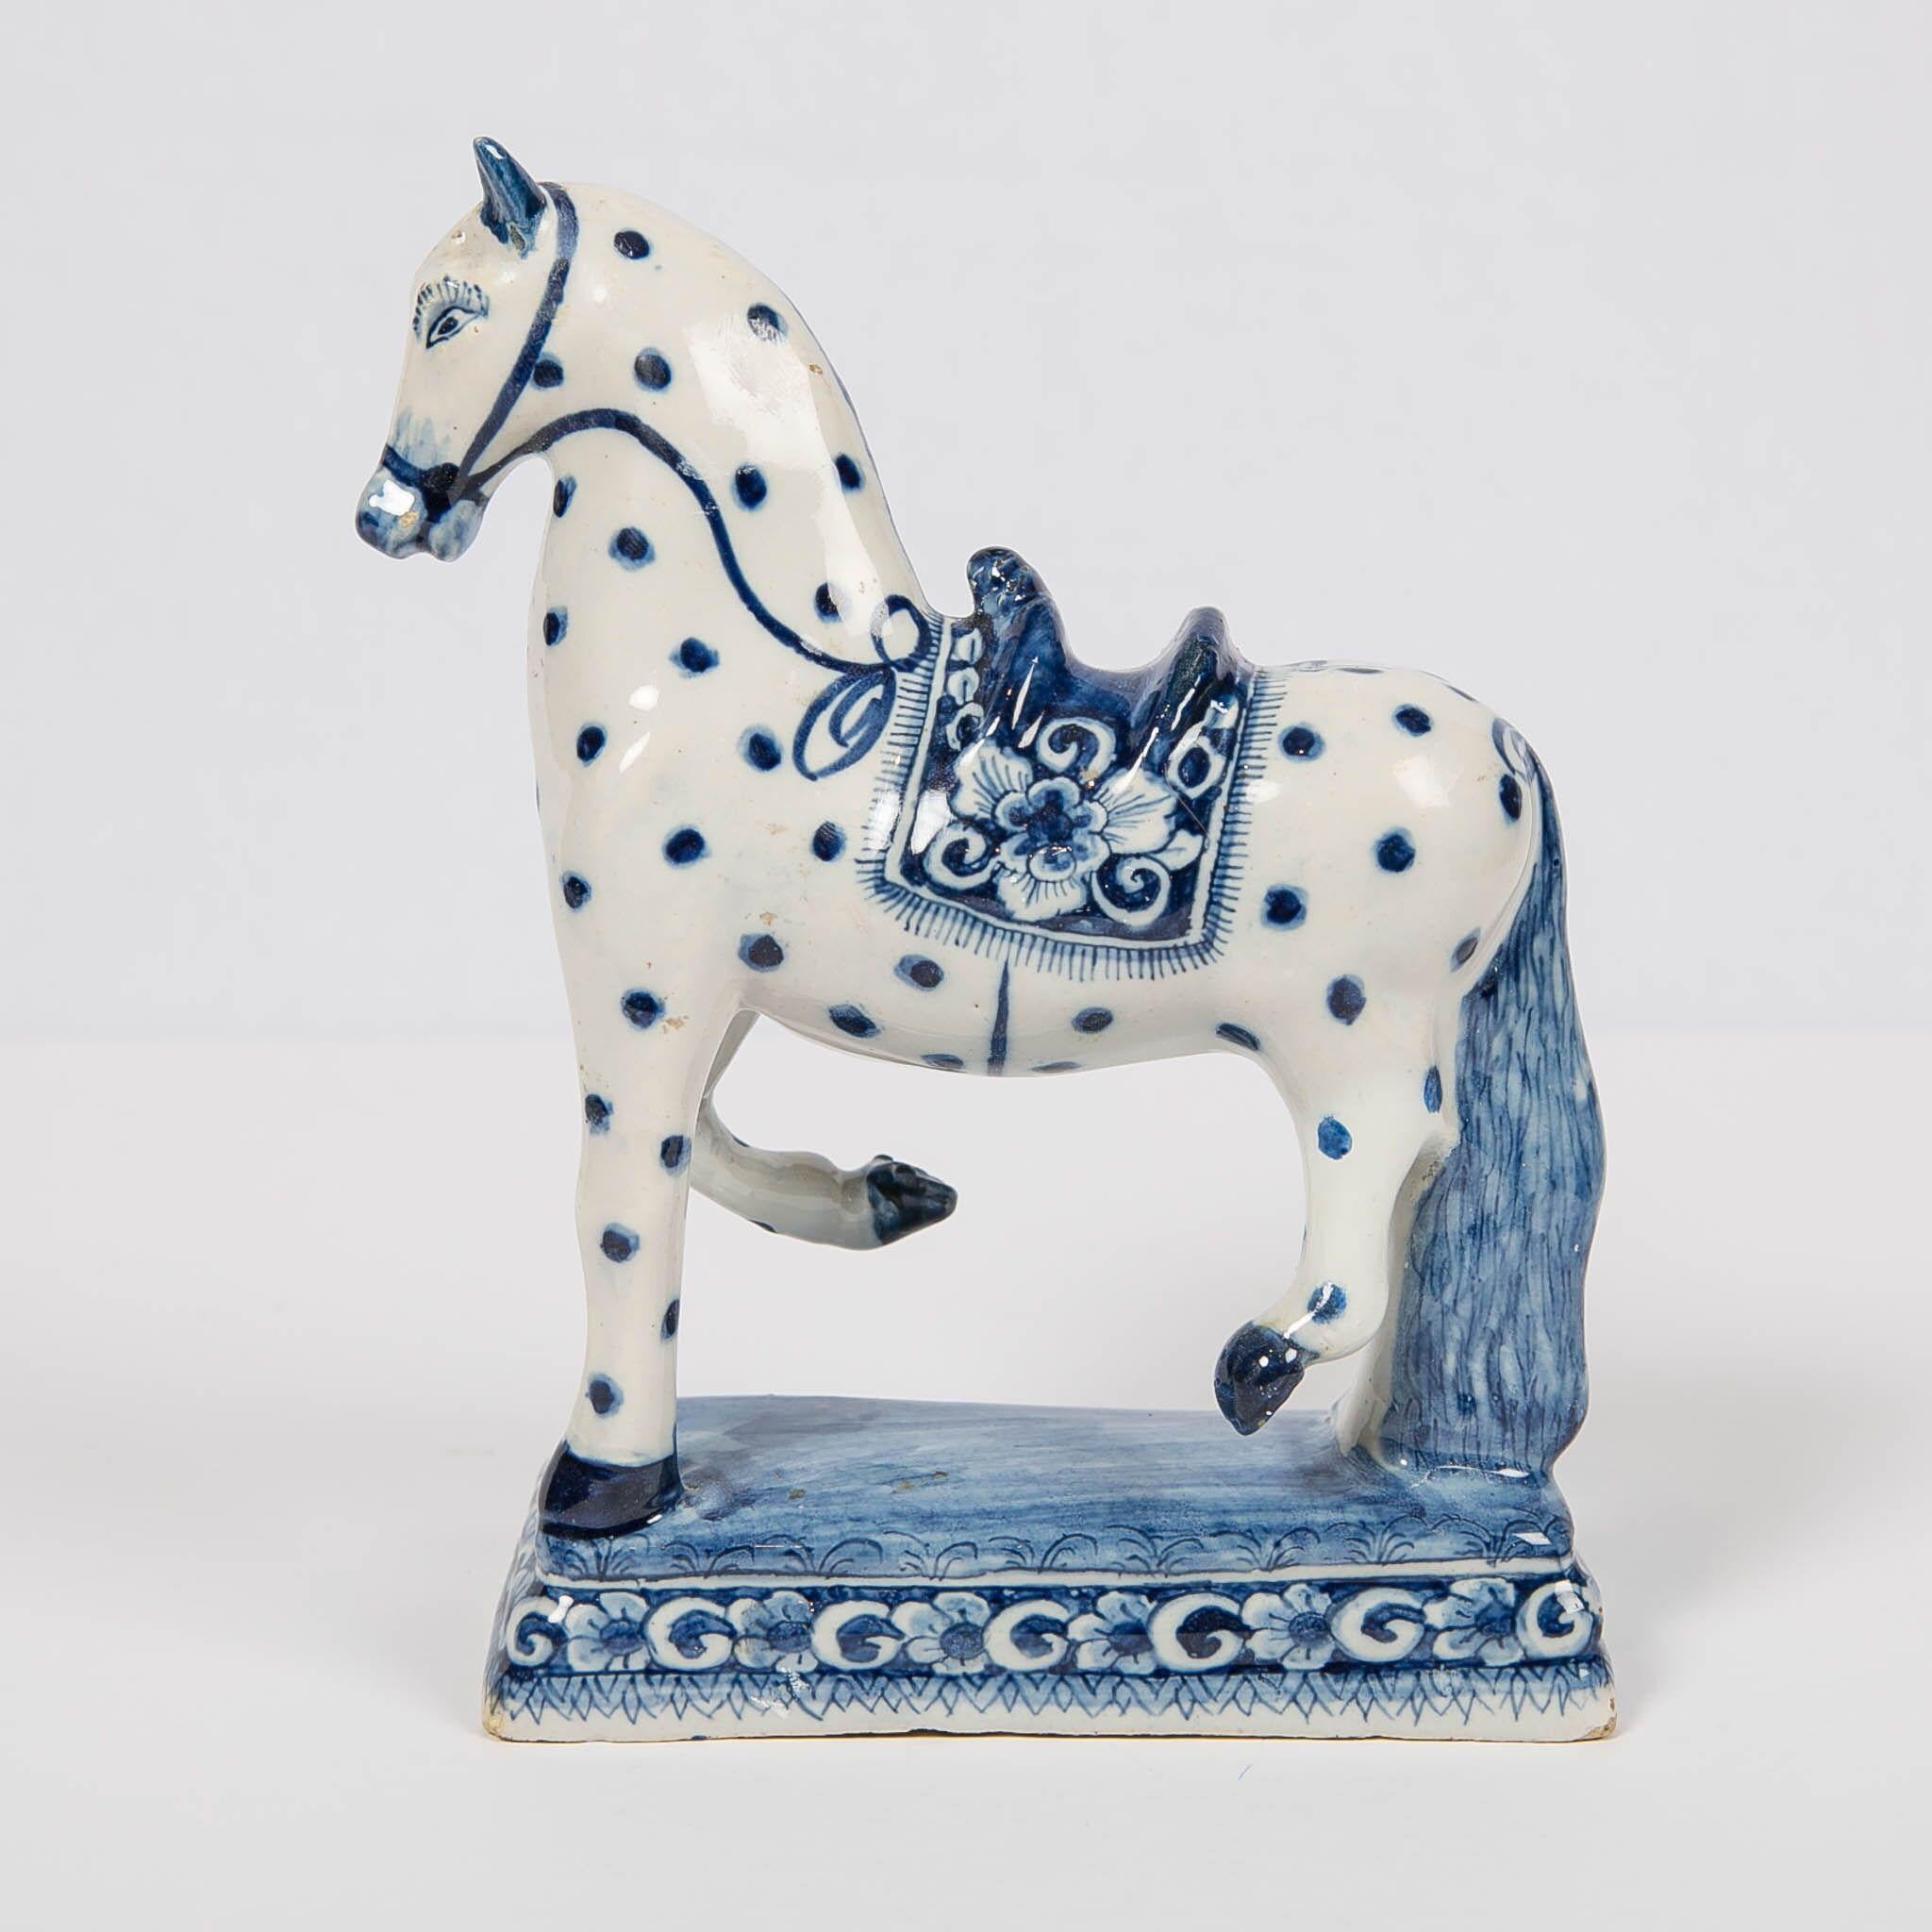 Glazed Dutch Delft Blue and White Horse 18th Century Made circa 1780